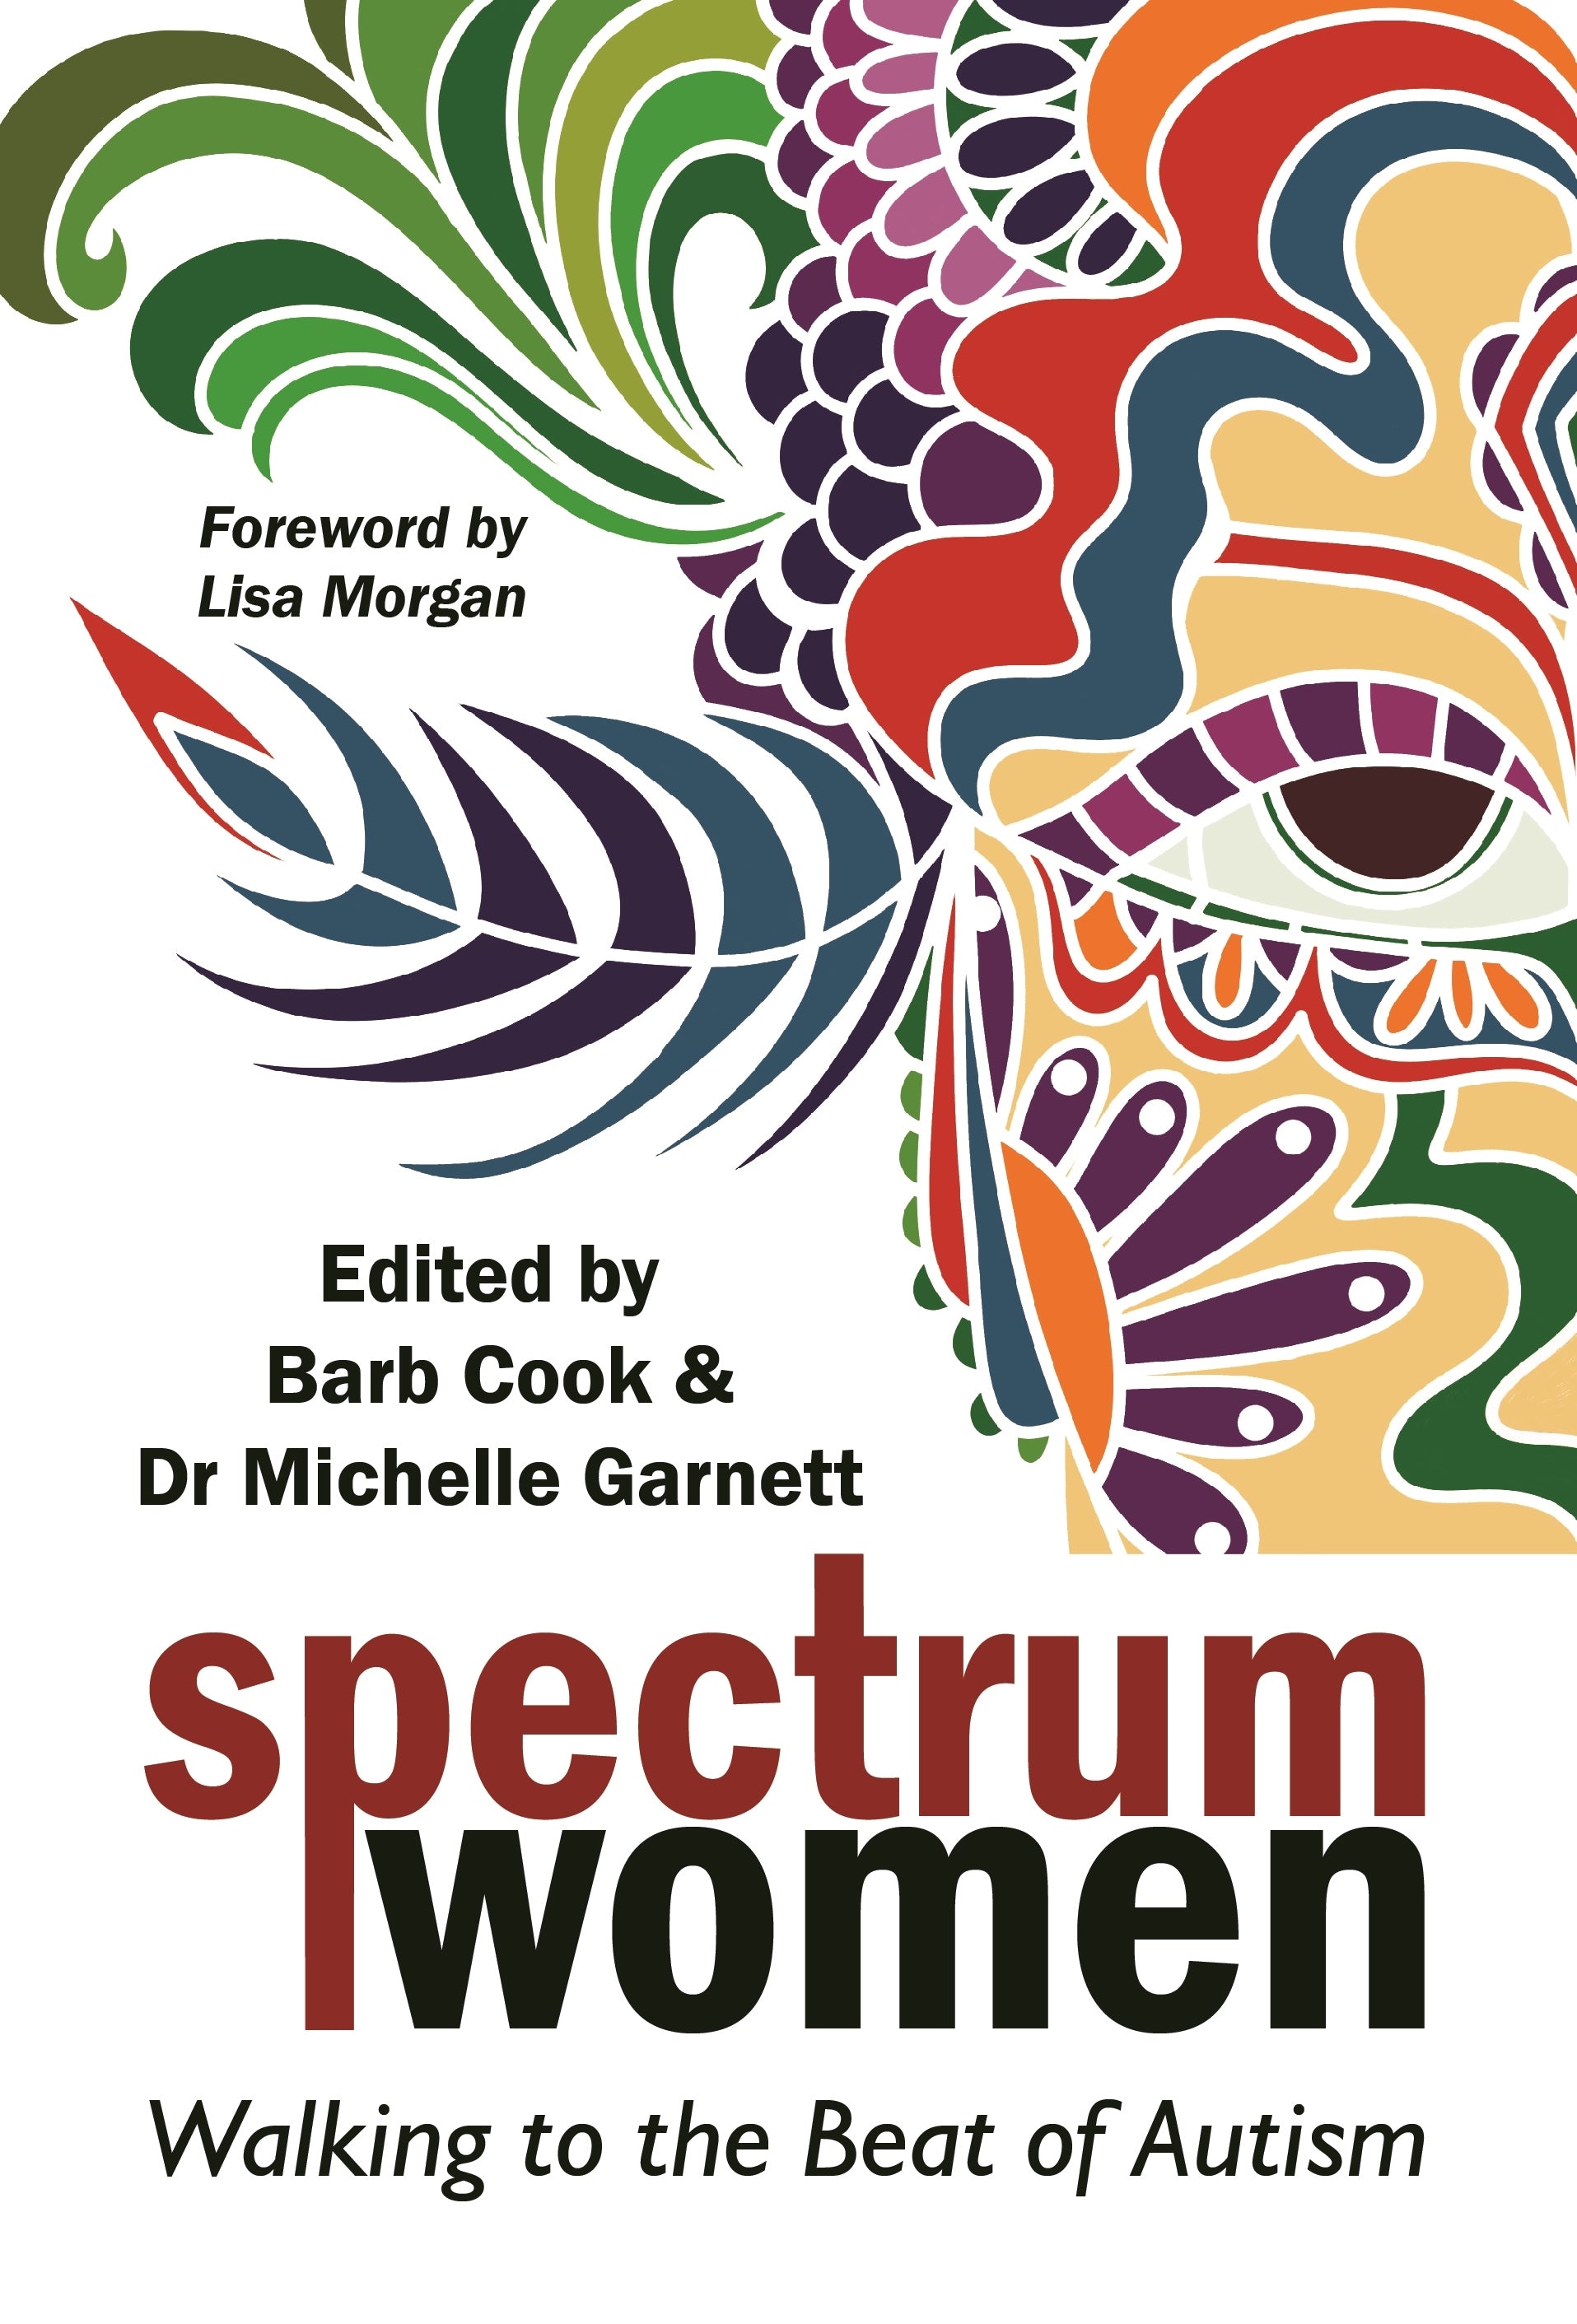 Spectrum Women by Barb Cook, Michelle Garnett, Lisa Morgan, No Author Listed